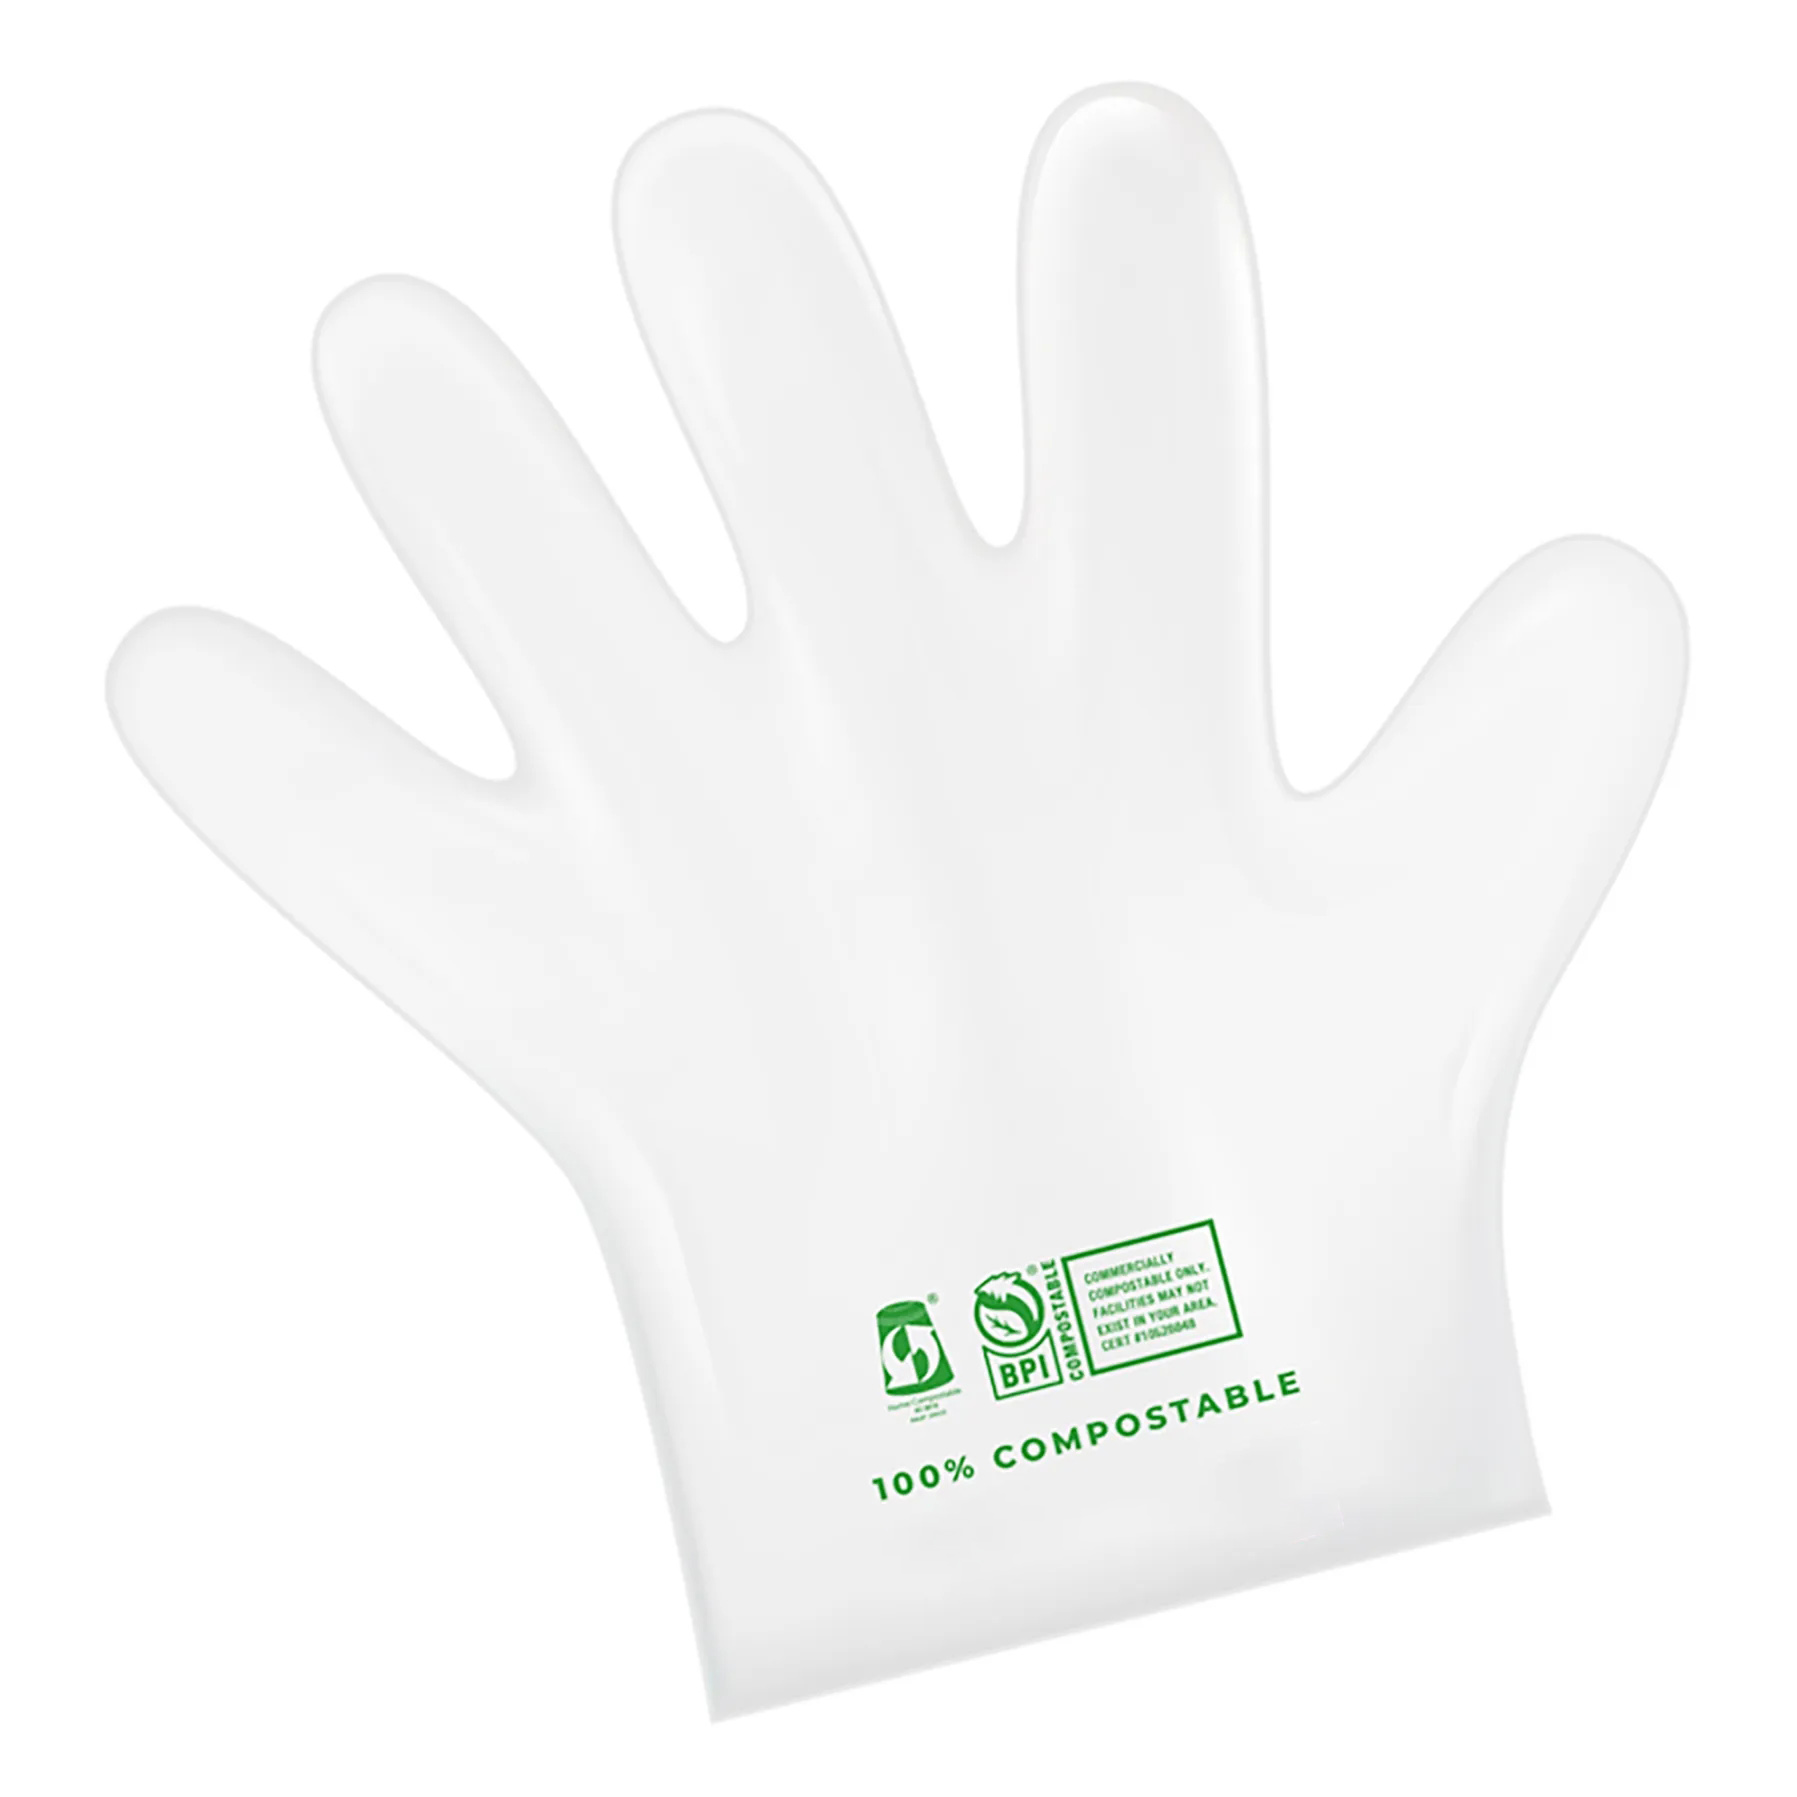 Biodegradable glove